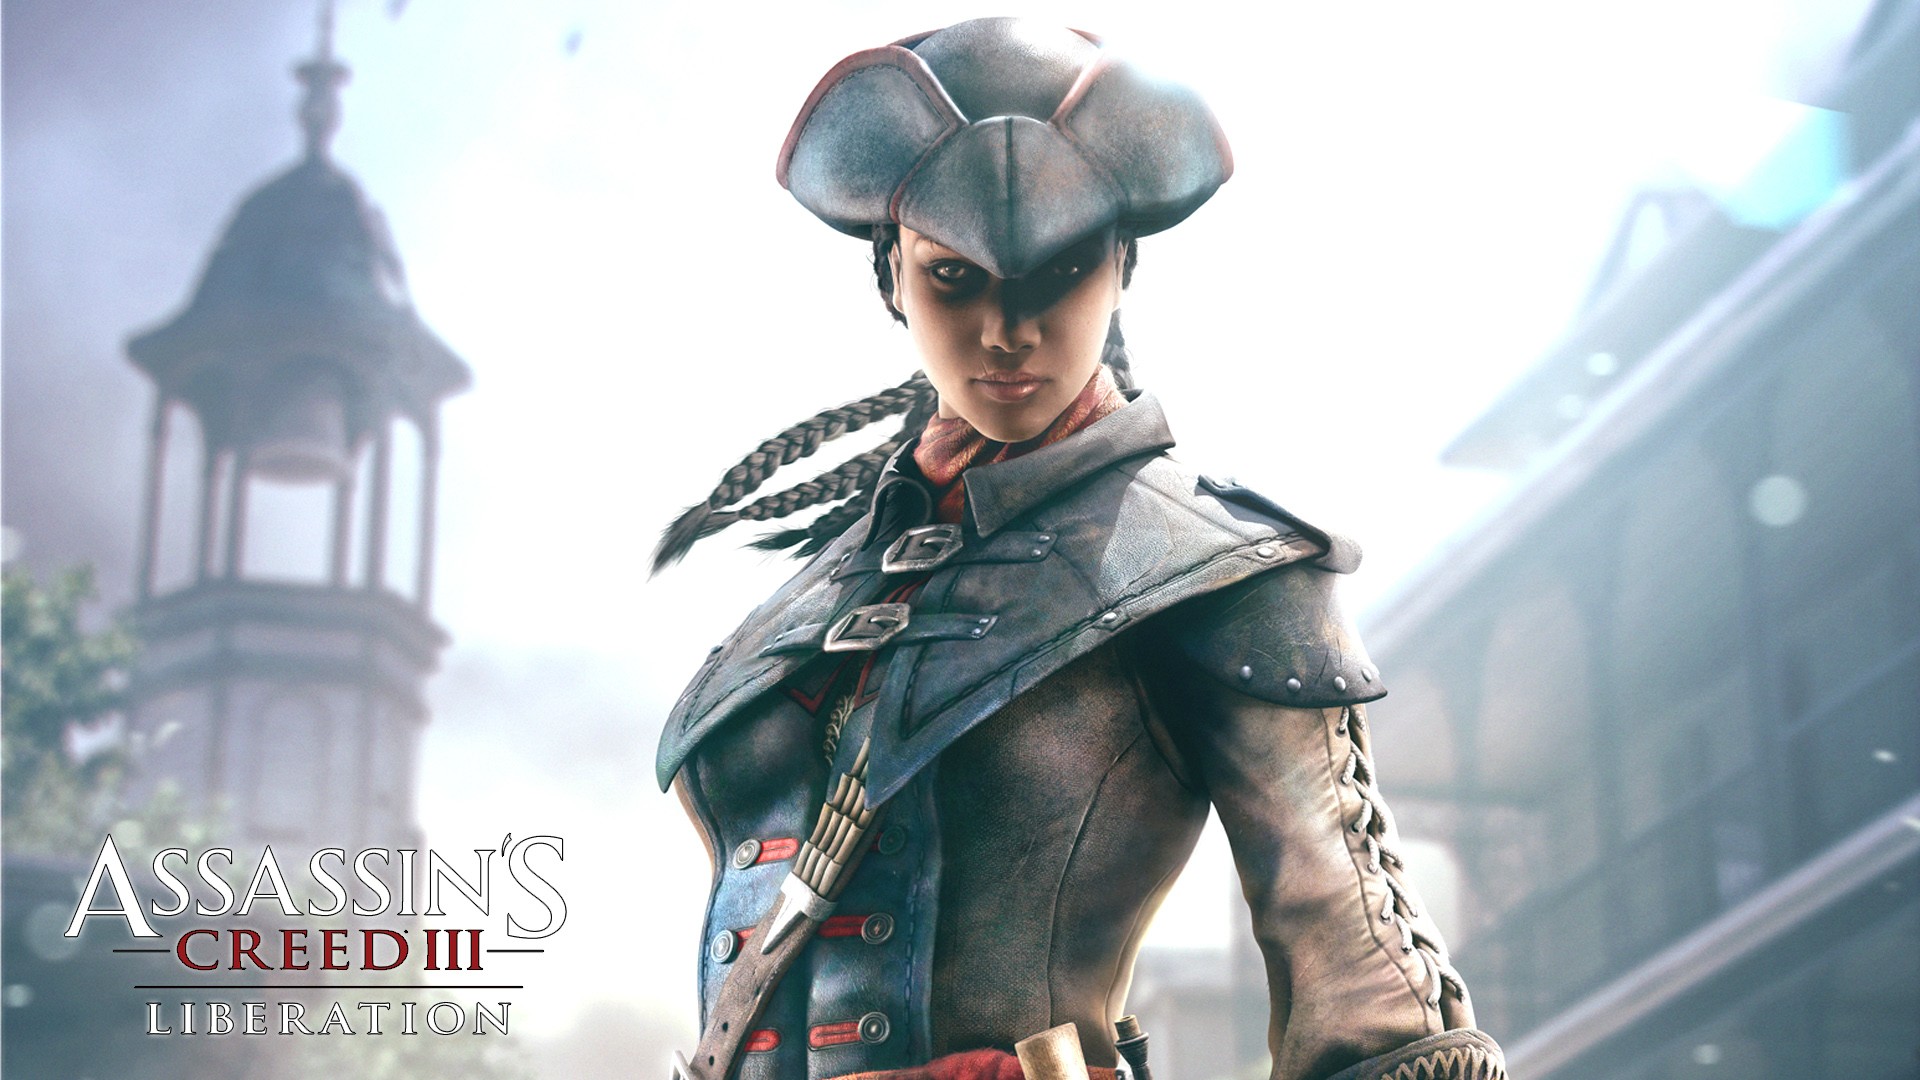 High Resolution Wallpaper | Assassin's Creed III: Liberation 1920x1080 px